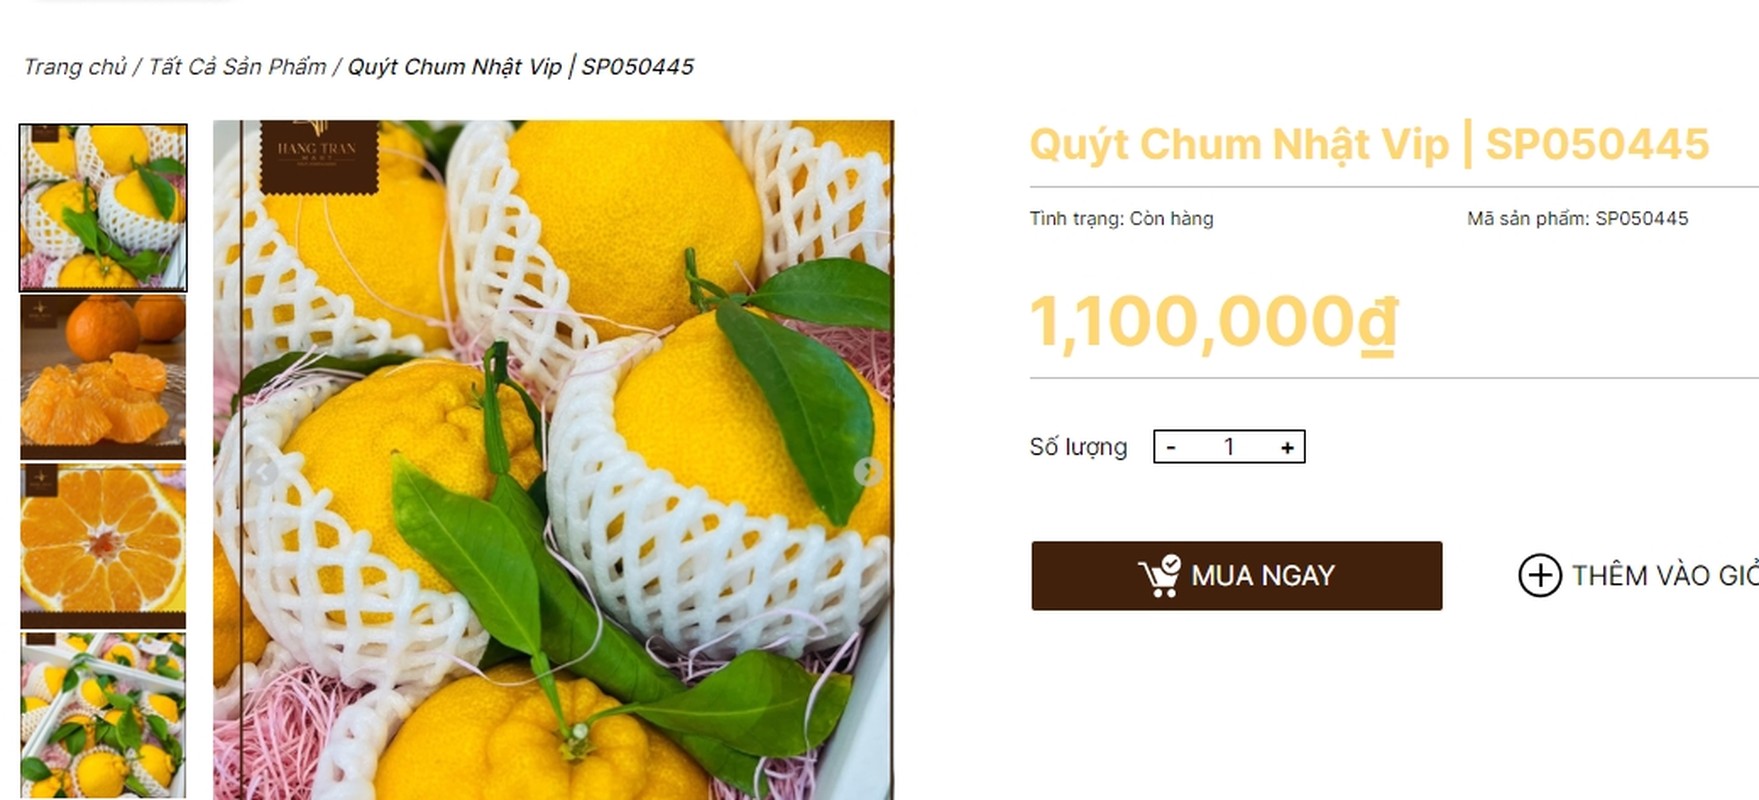 Su that ve quyt chum giong Nhat chi 20.000 dong “doi” cho mang